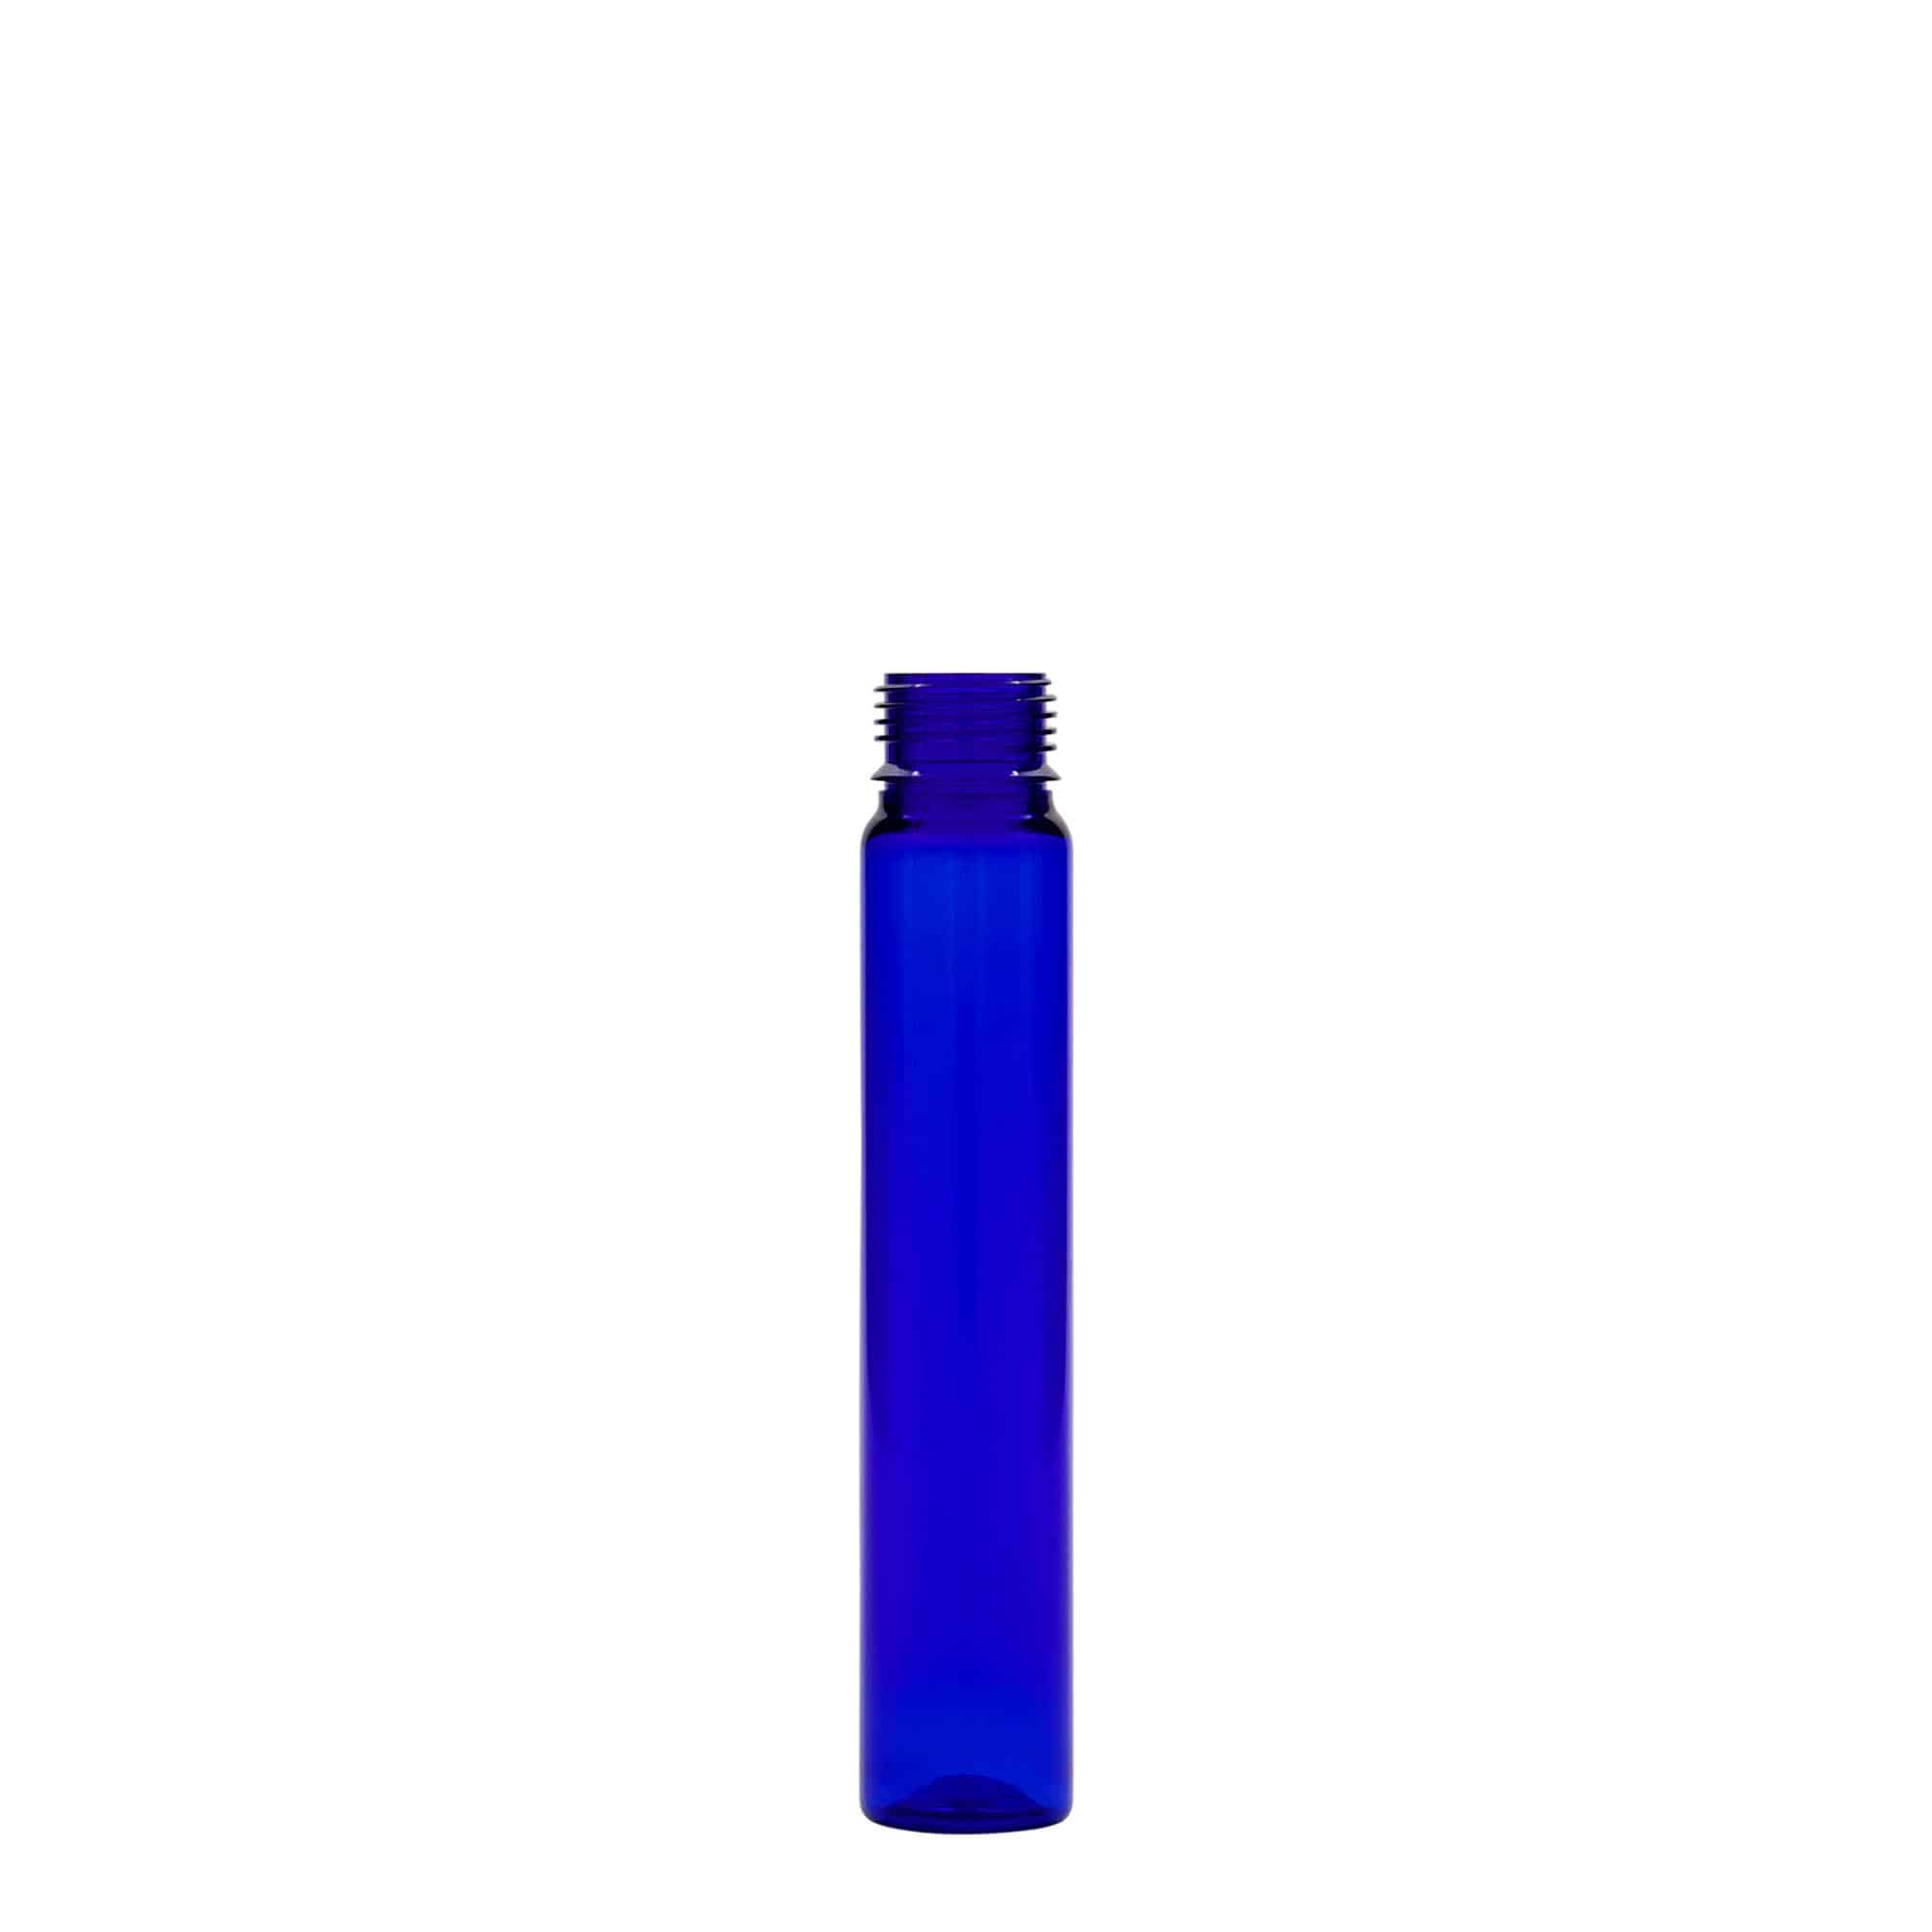 Tubito de PET de 25 ml, plástico, azul real, boca: tapón de rosca